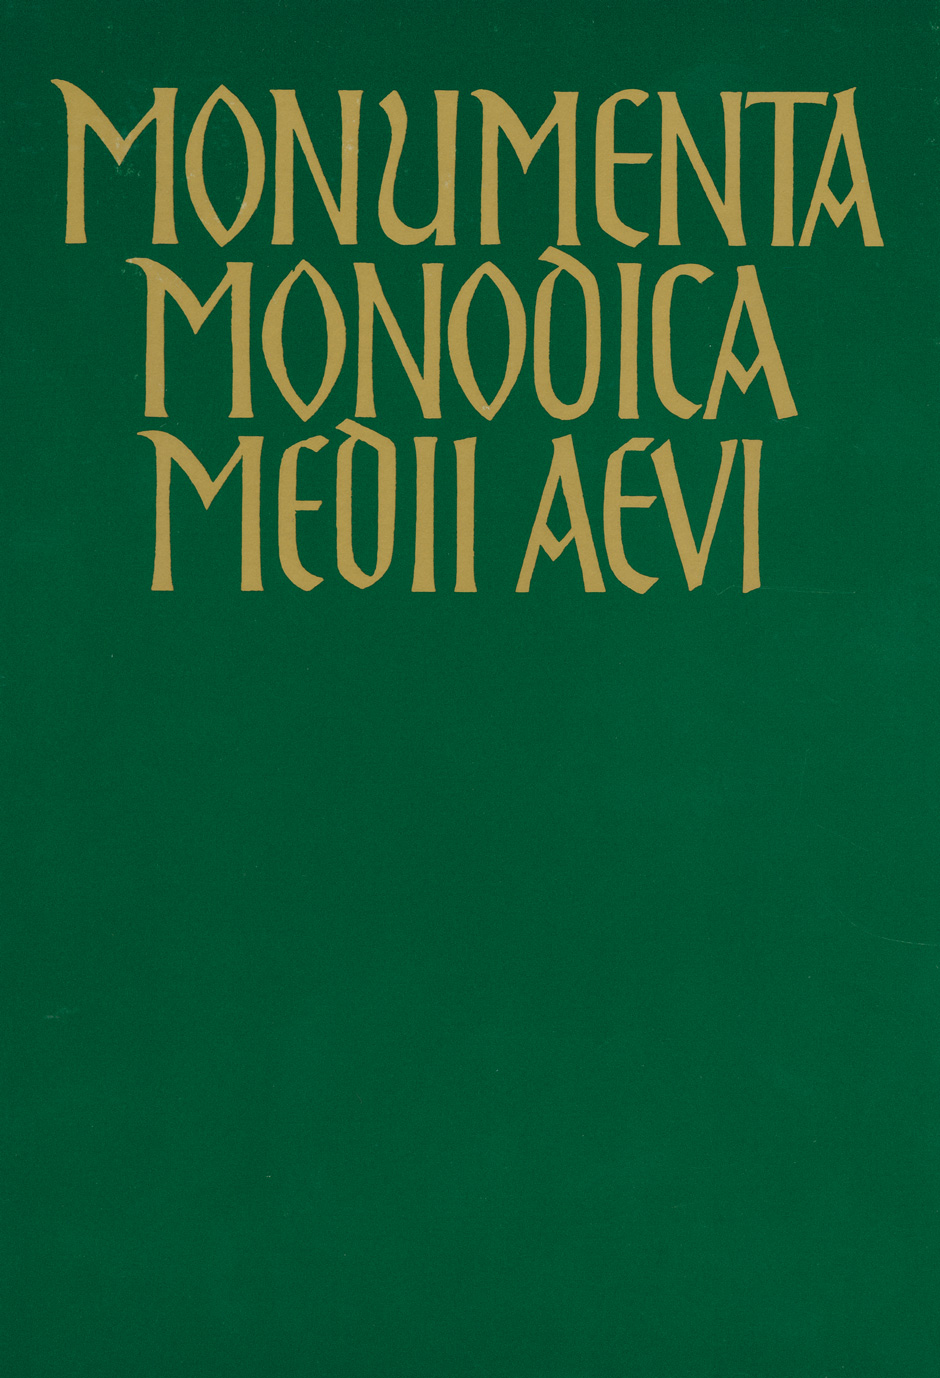 Monumenta Monodica Medii Aevi, Subsidia 8 (Troparia tardiva II)